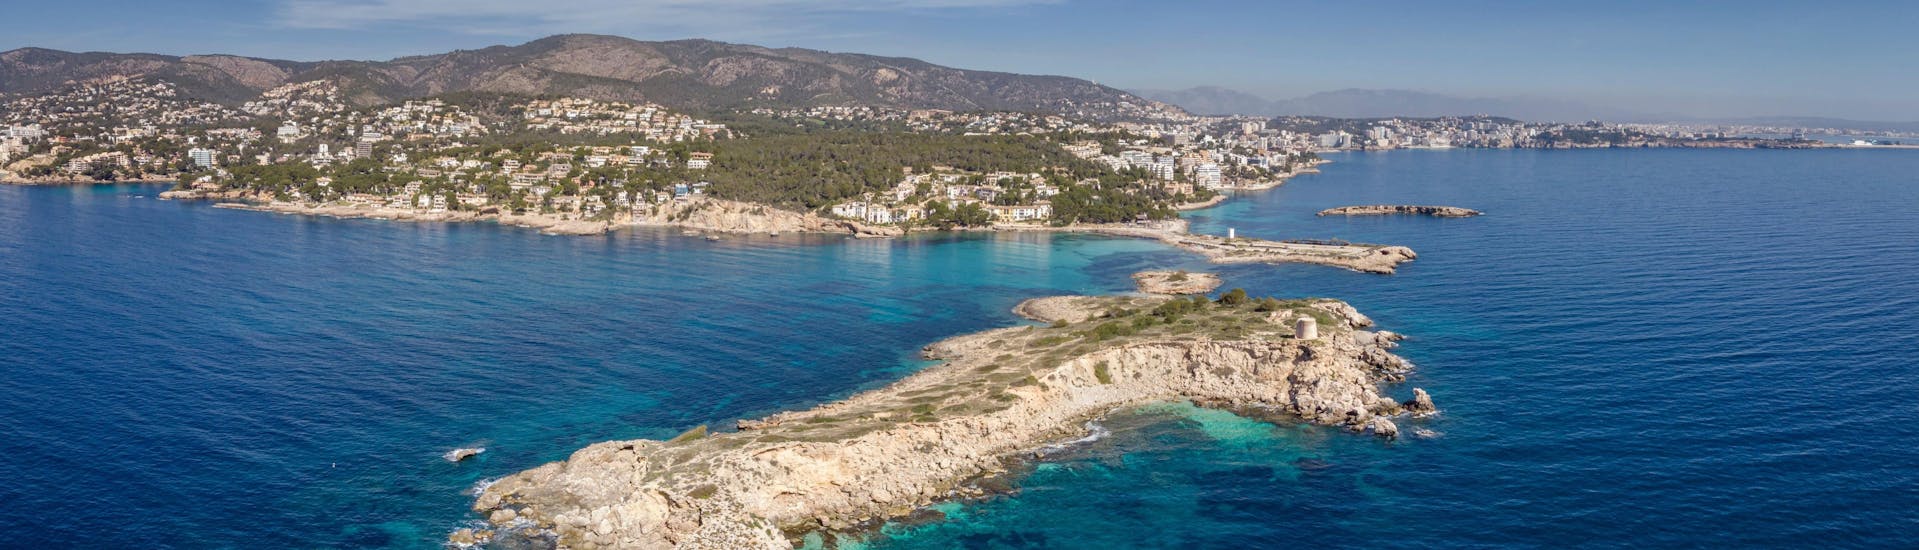 View of Illetes beach, Calvià, Mallorca, a popular destination for boat trips. 